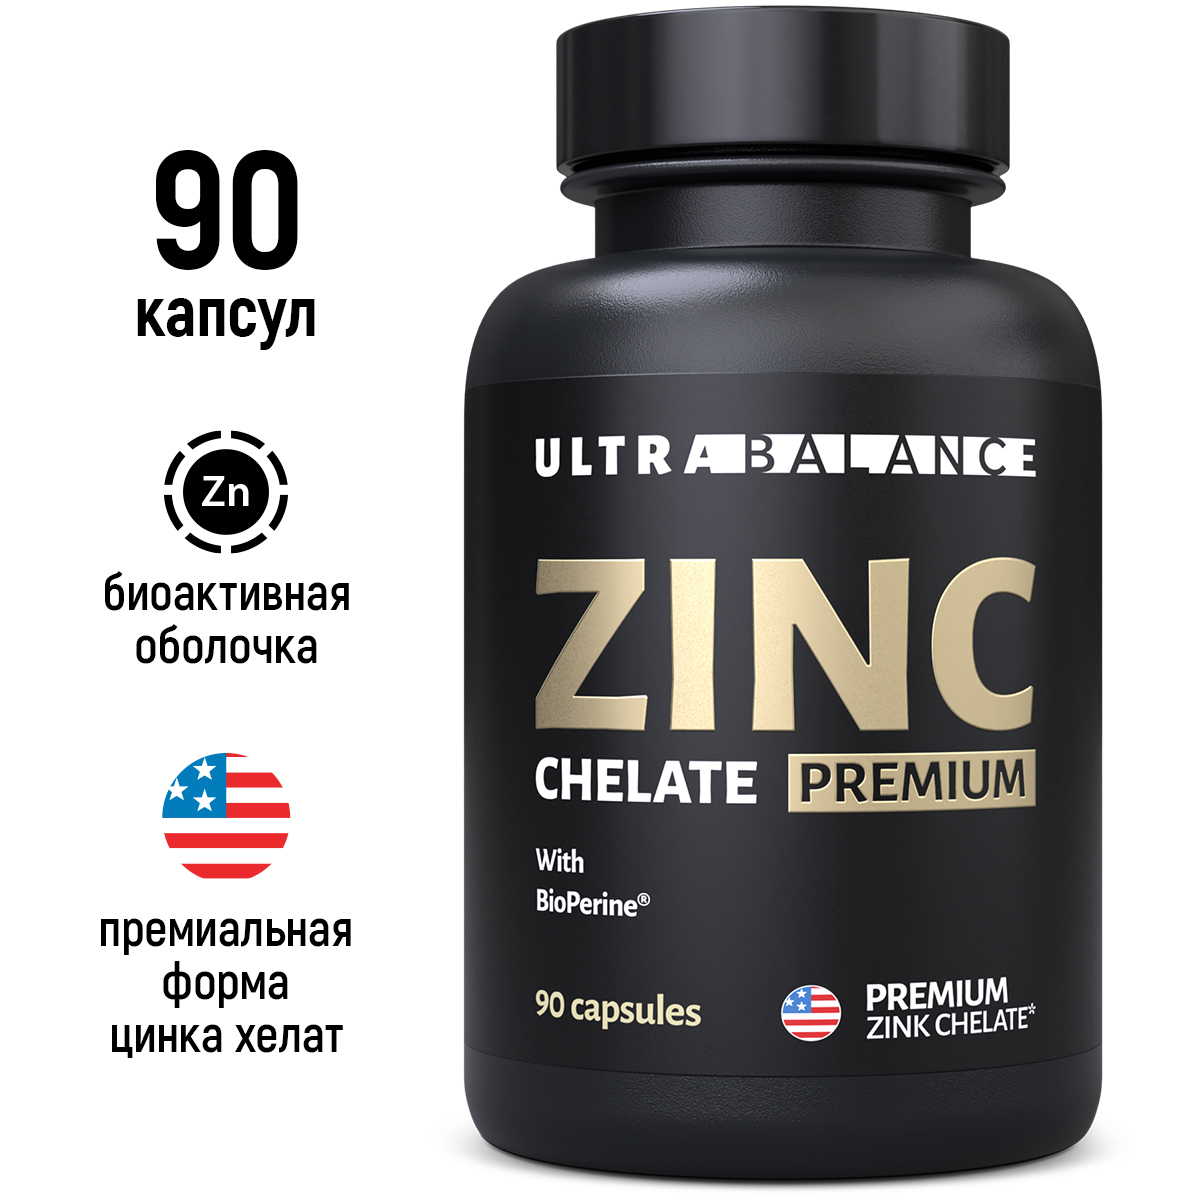 Zinc Chelated Premium With BioPerine, Цинк хелат Премиум с пиперином ULTRABALANCE Zinc Chelated Premium капсулы 90 шт.  - купить